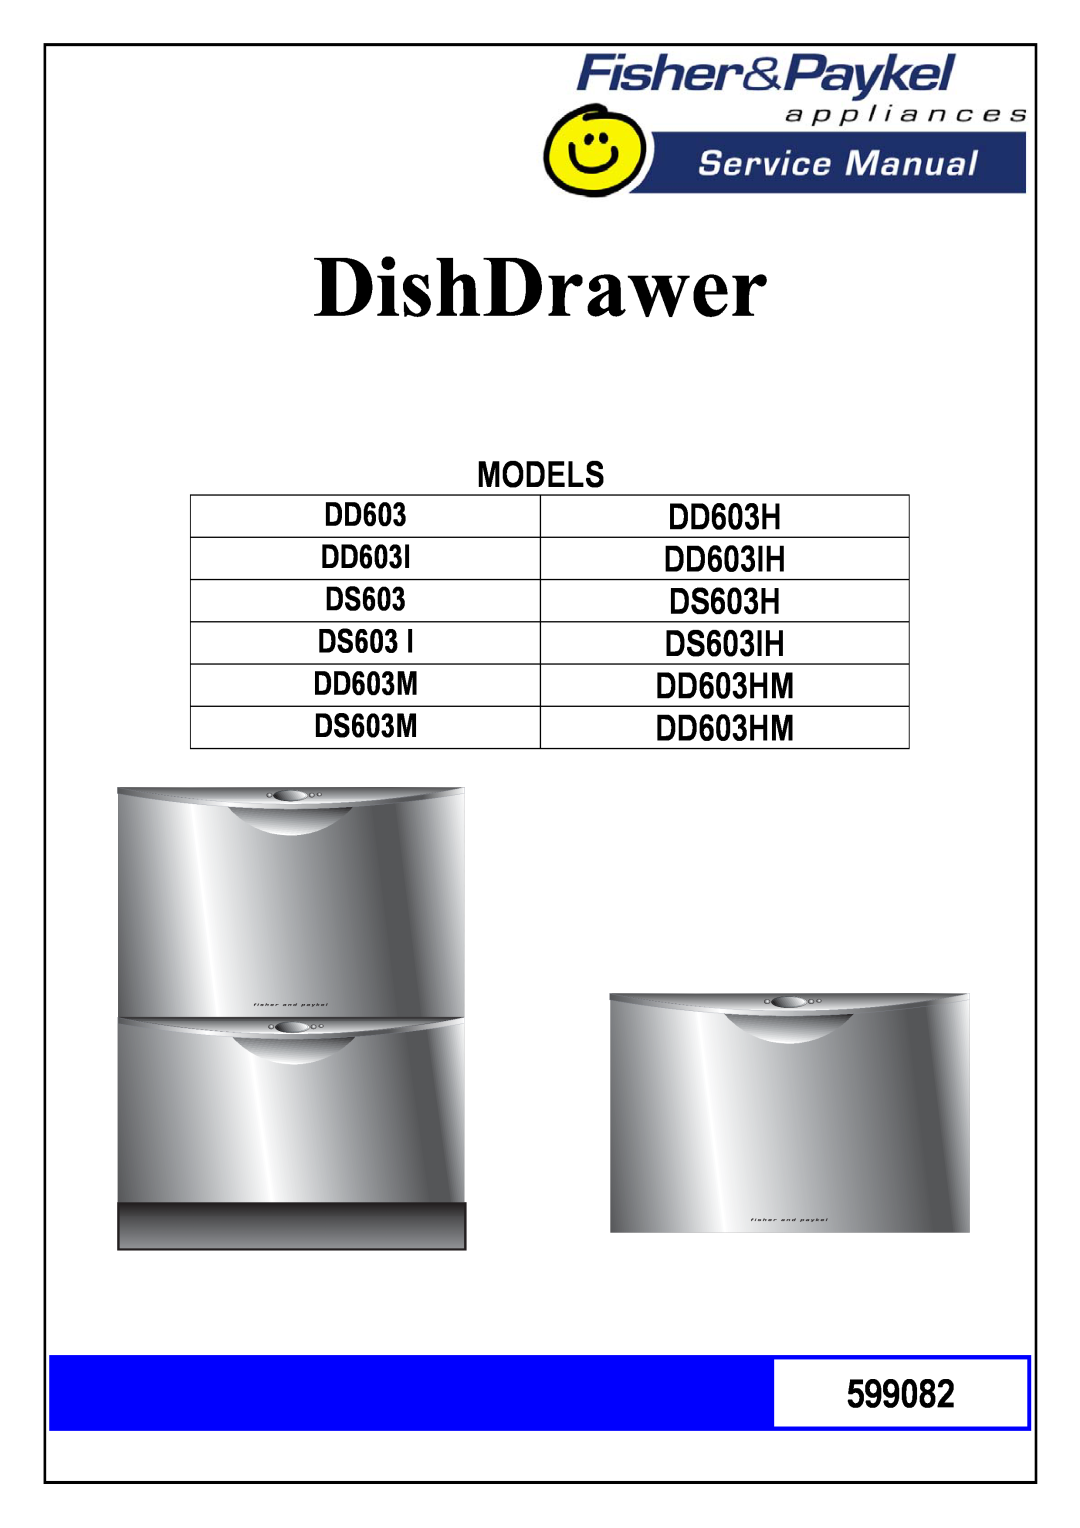 Fisher & Paykel DD603HM manual DishDrawer, Models, DD603IH, DS603IH, DS603HM, DD603M, DS603M, 599084 